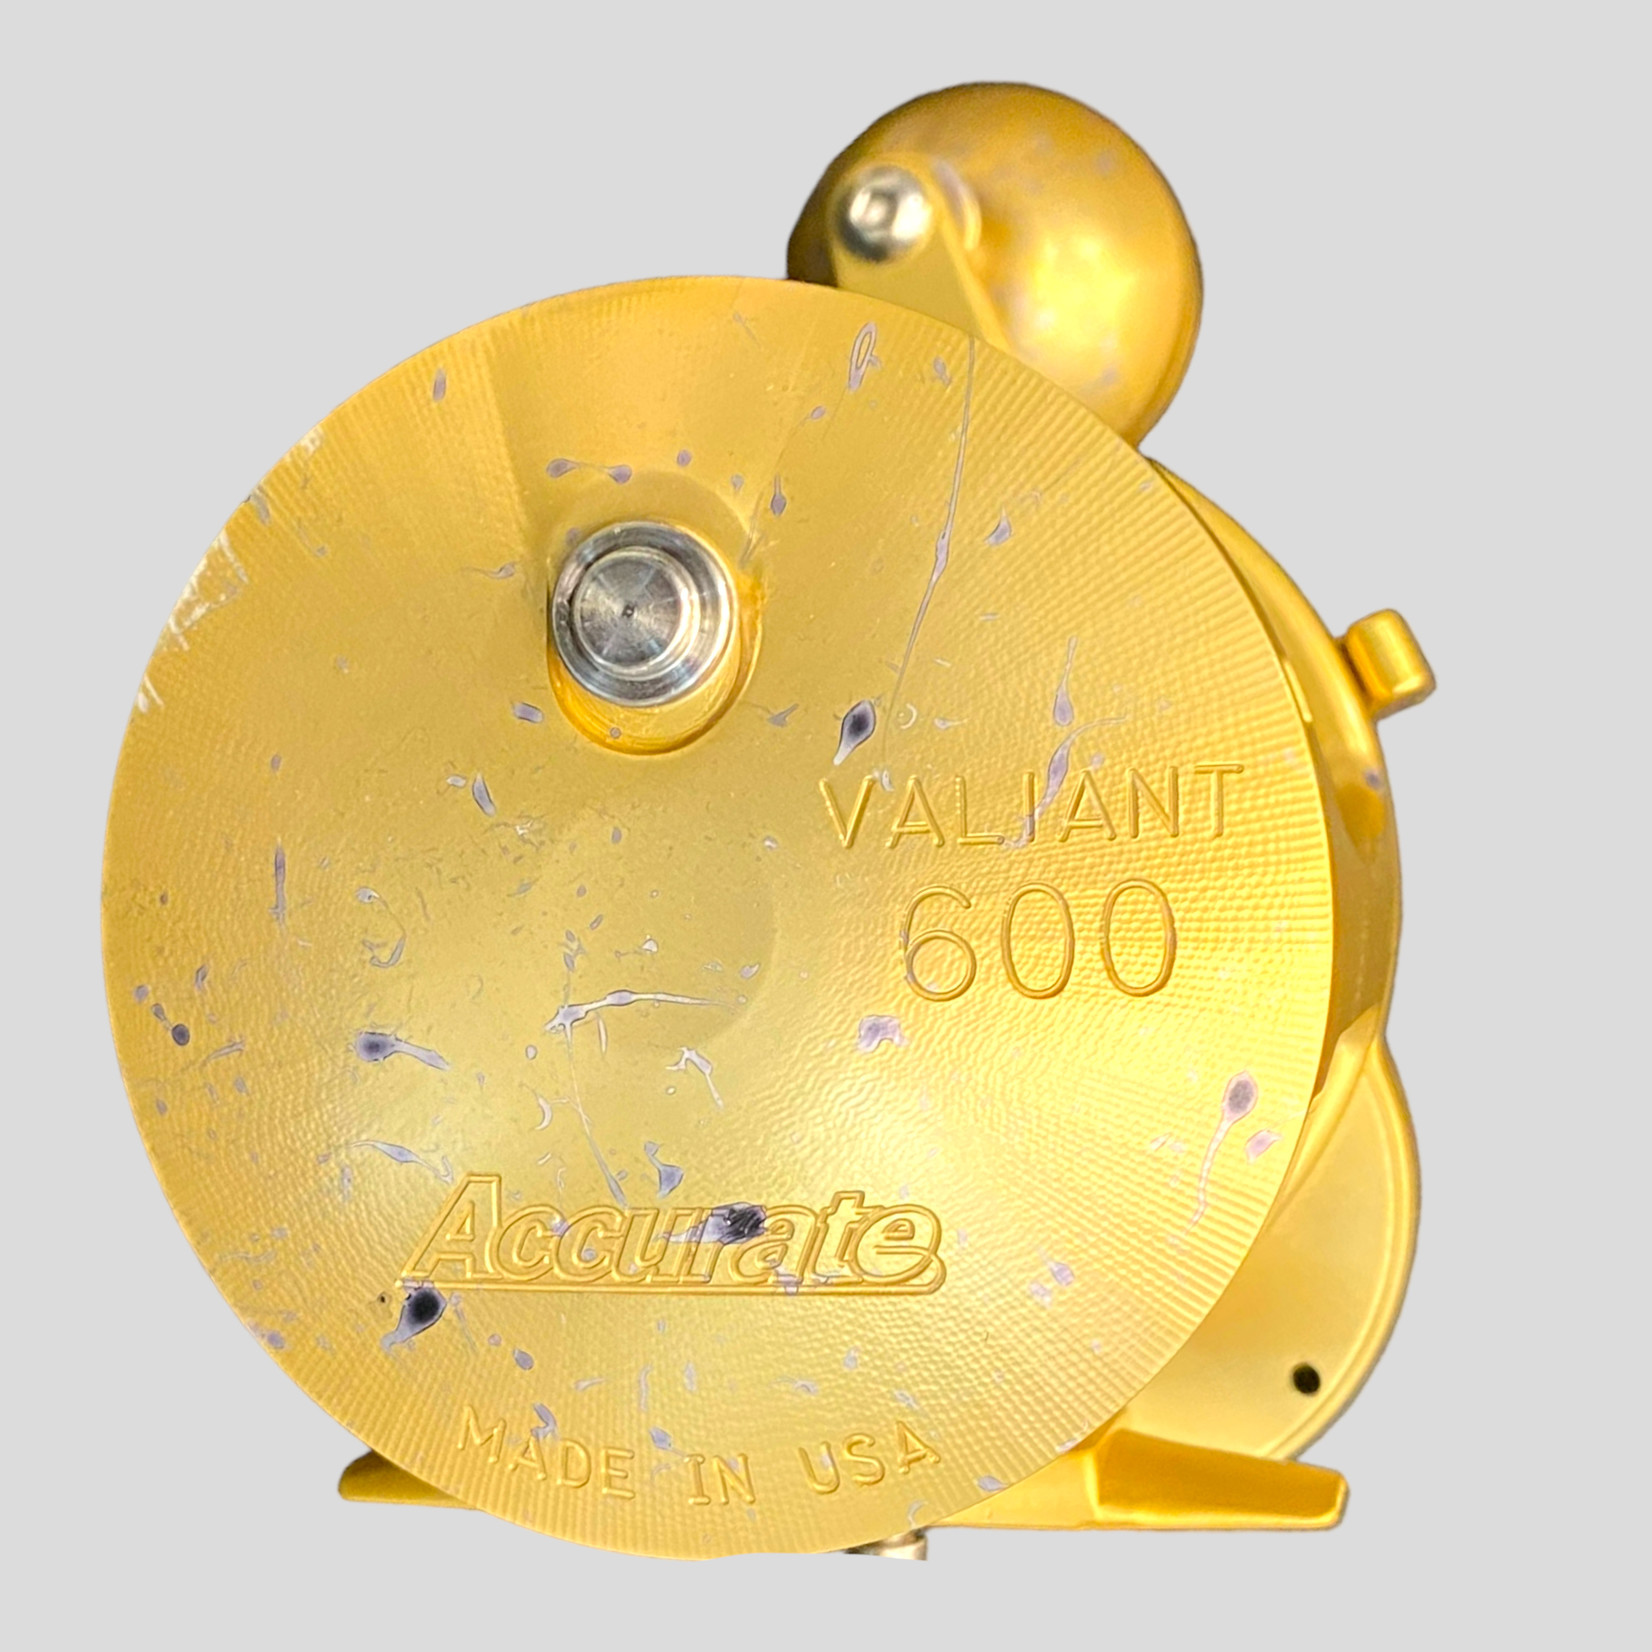 Accurate Valiant BV2 Golden Mahi - Tyalure Tackle